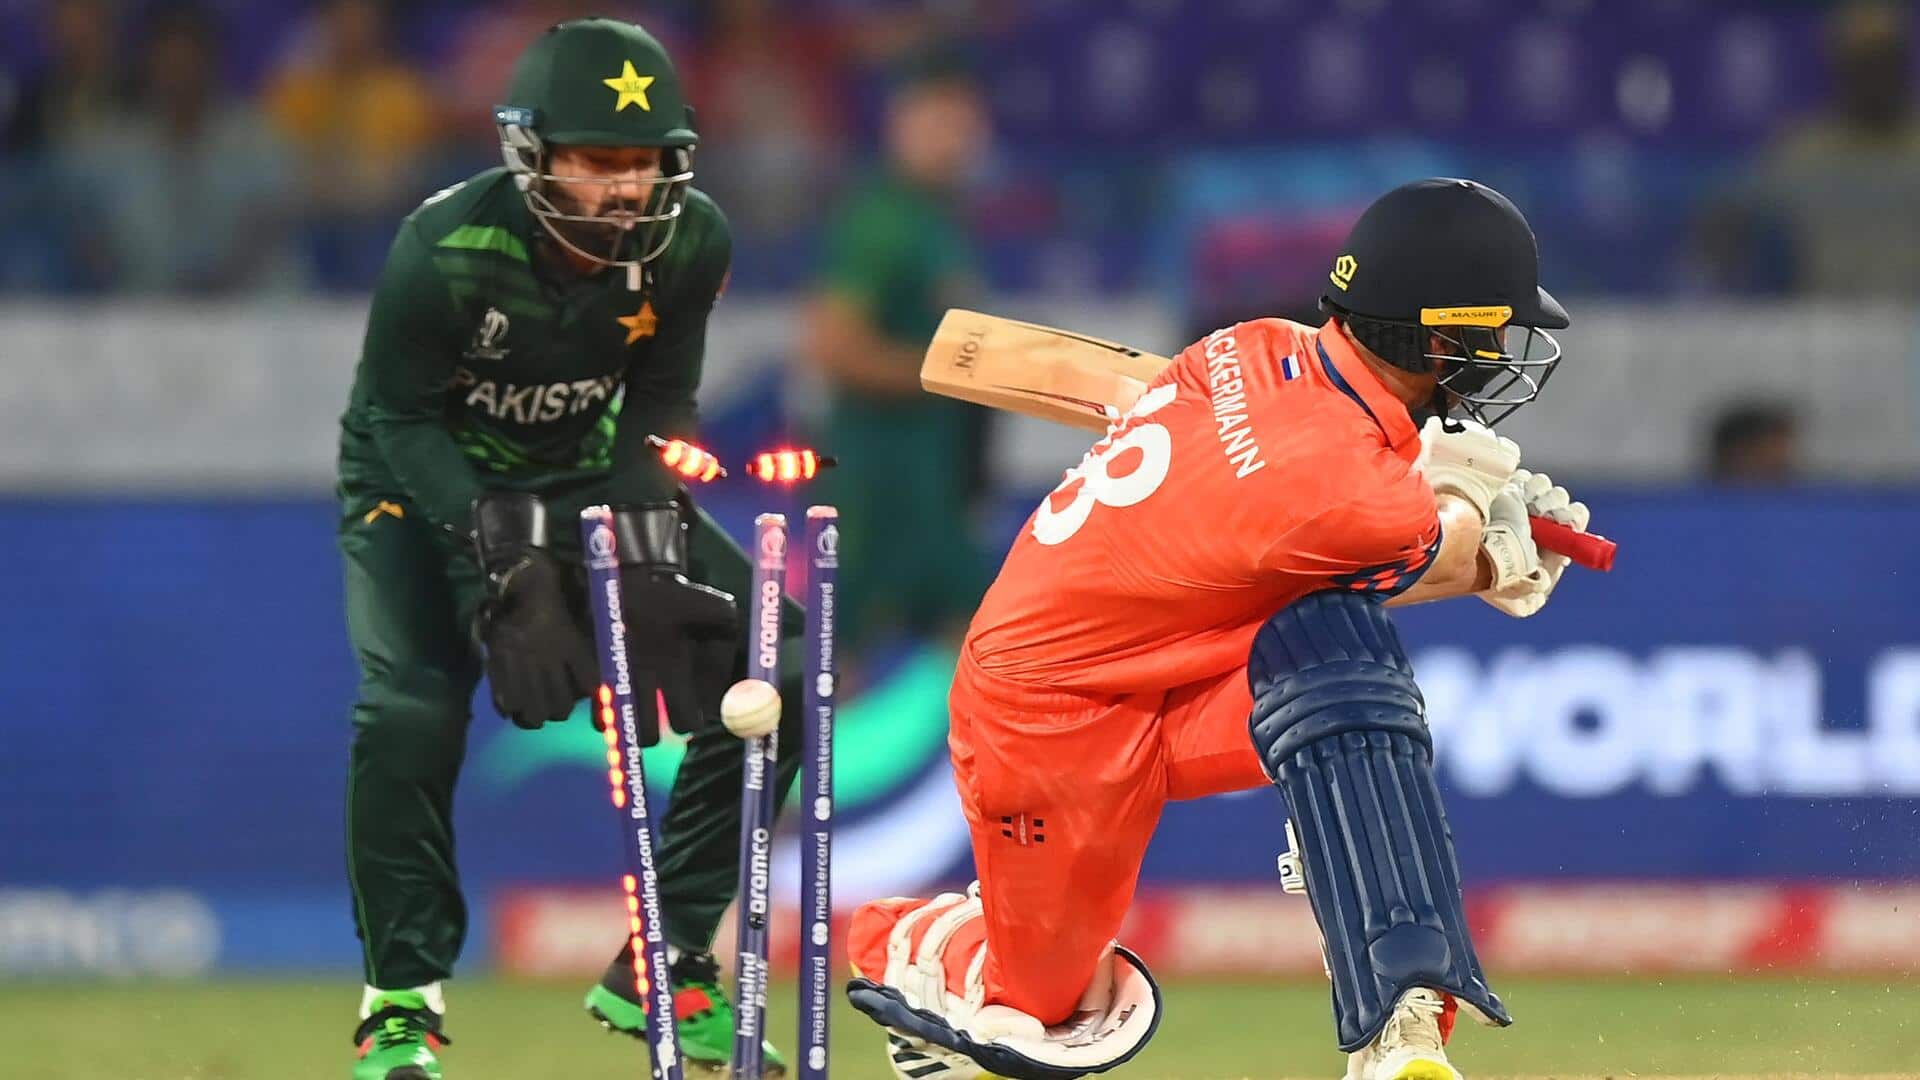 ICC Cricket World Cup, Pakistan overcome spirited Netherlands: Key stats